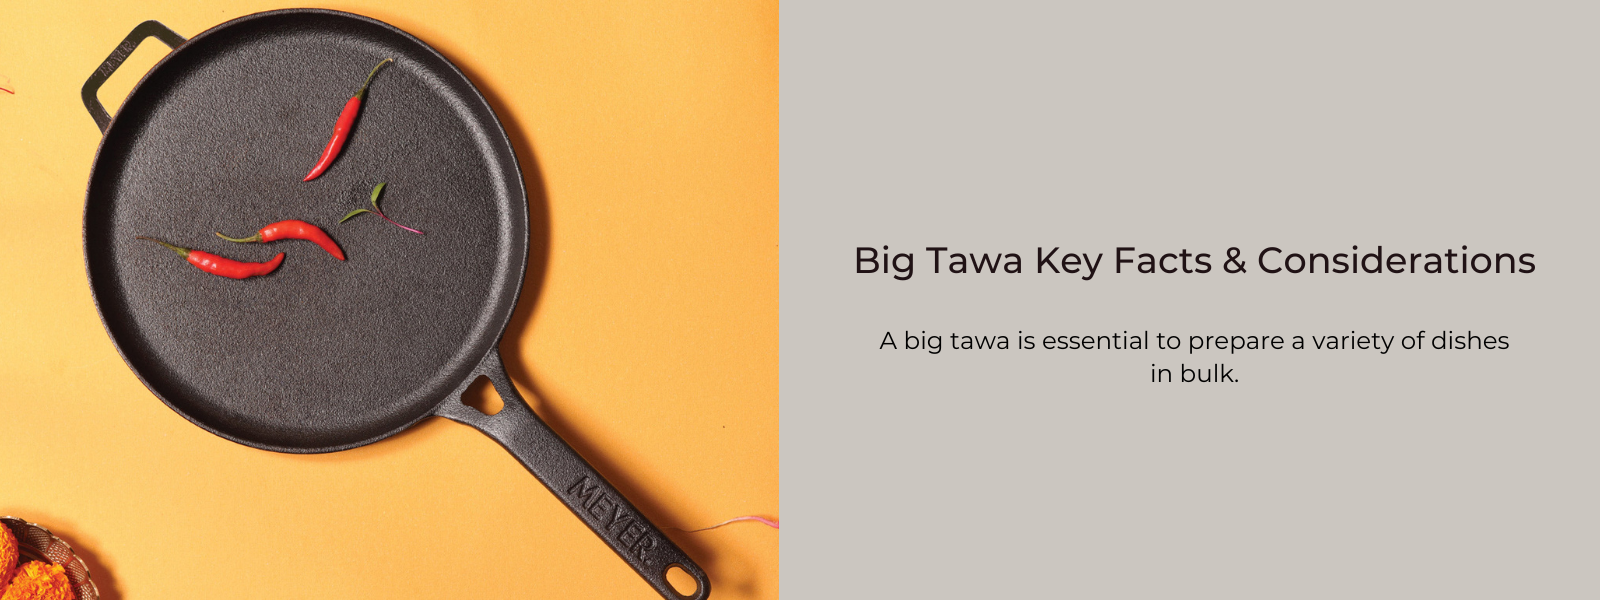 Big Tawa For Restaurant: Key Facts & Considerations